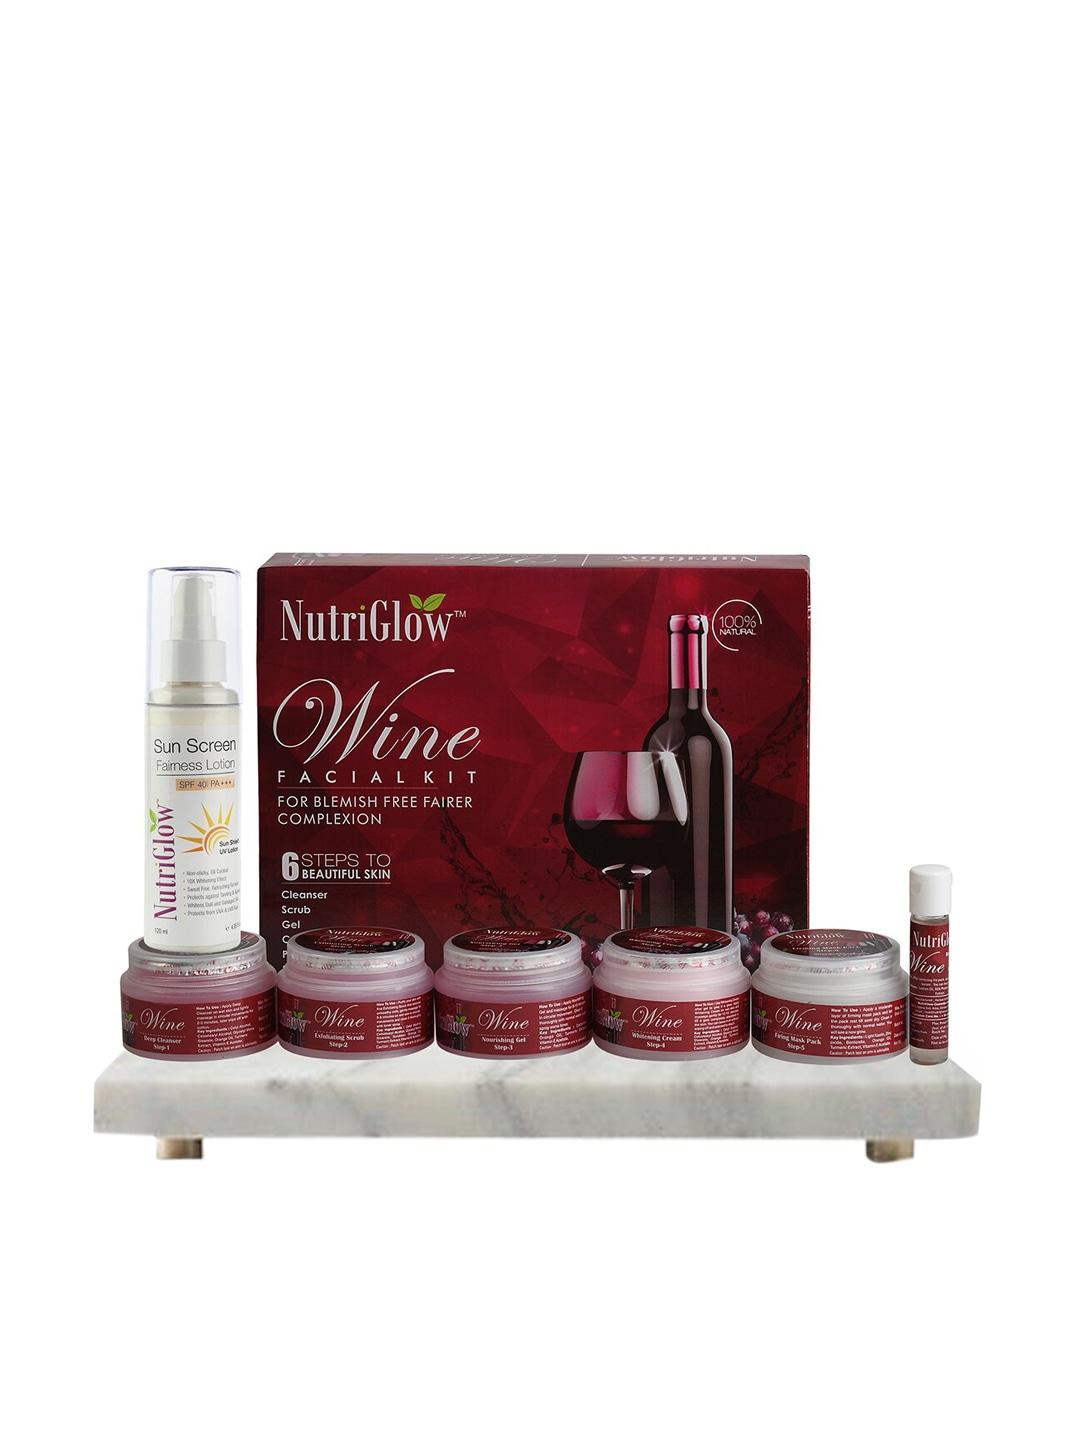 nutriglow wine facial kit 250g + 10ml & sun screen fairness lotion spf 40 120ml